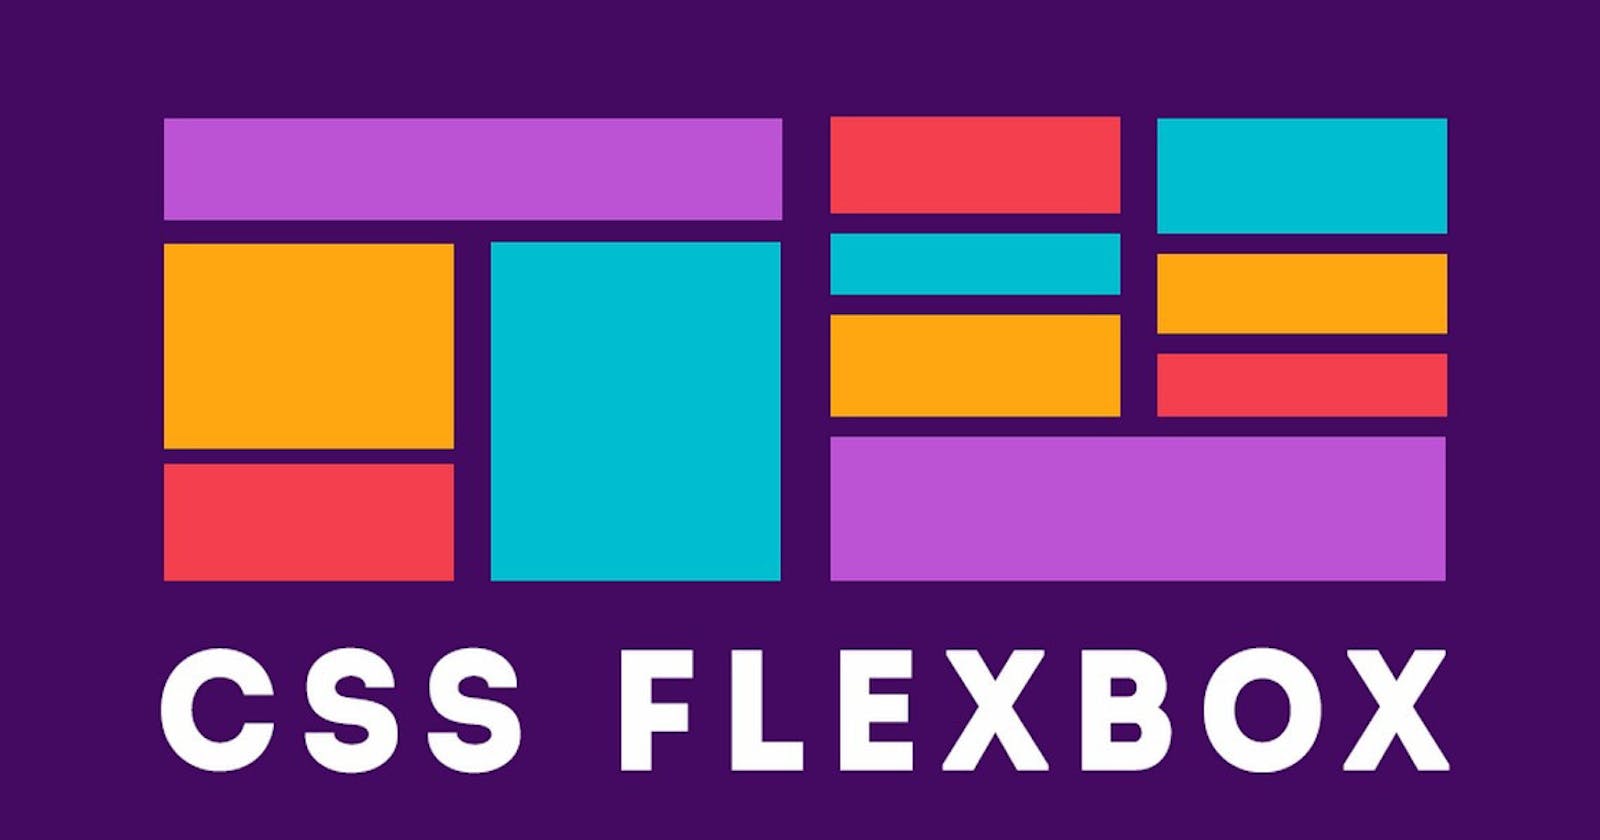 Flex-grow, Flex-shrink, Flex-basis - Day 4 Coding Challenge - Seb Codes the Web